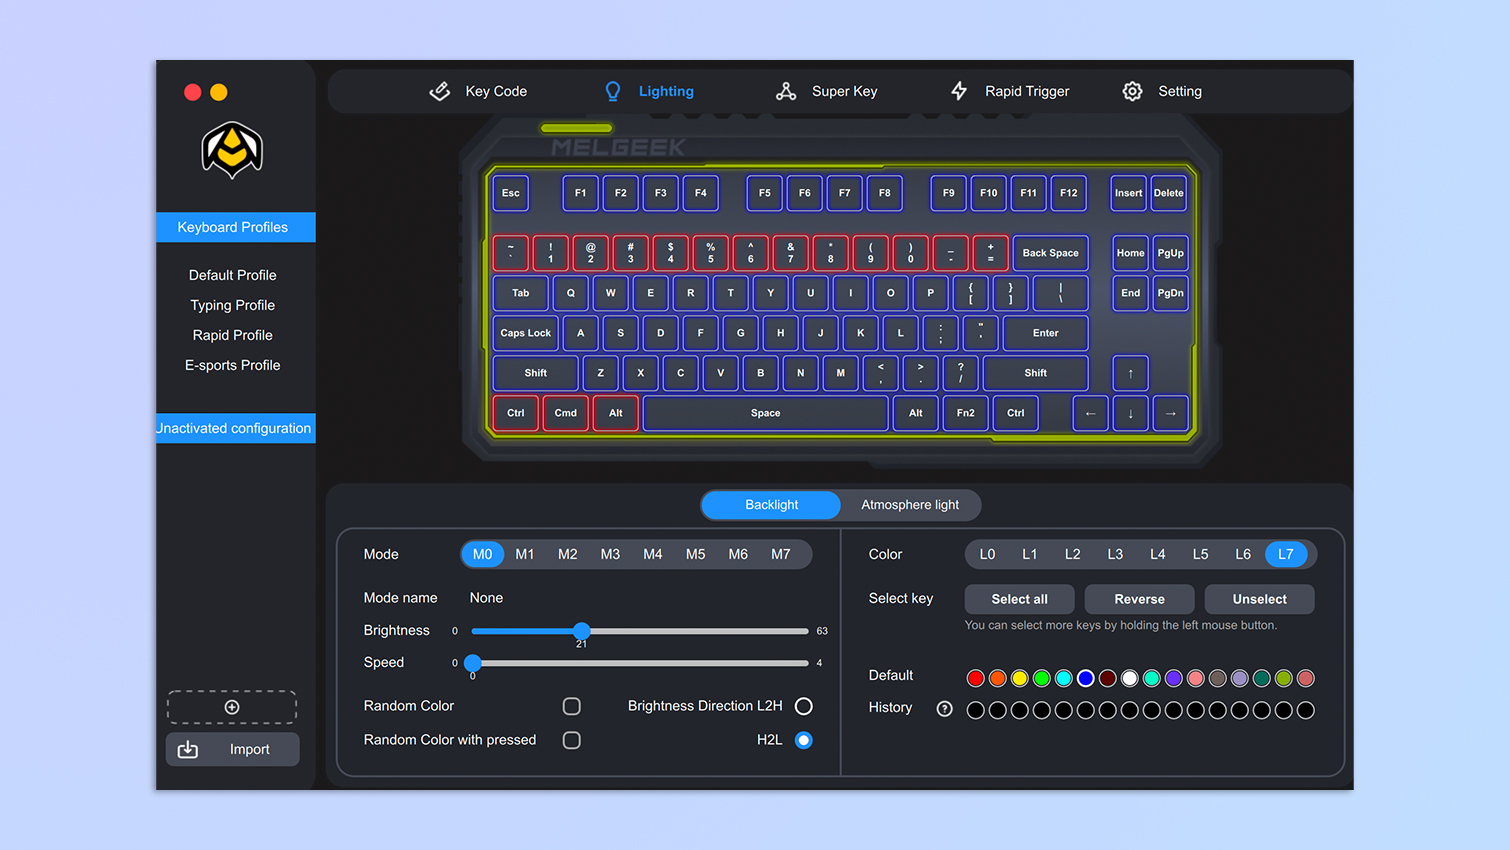 A screenshot of the MelGeek Hive companion software for the MelGeek CYBER01 keyboard